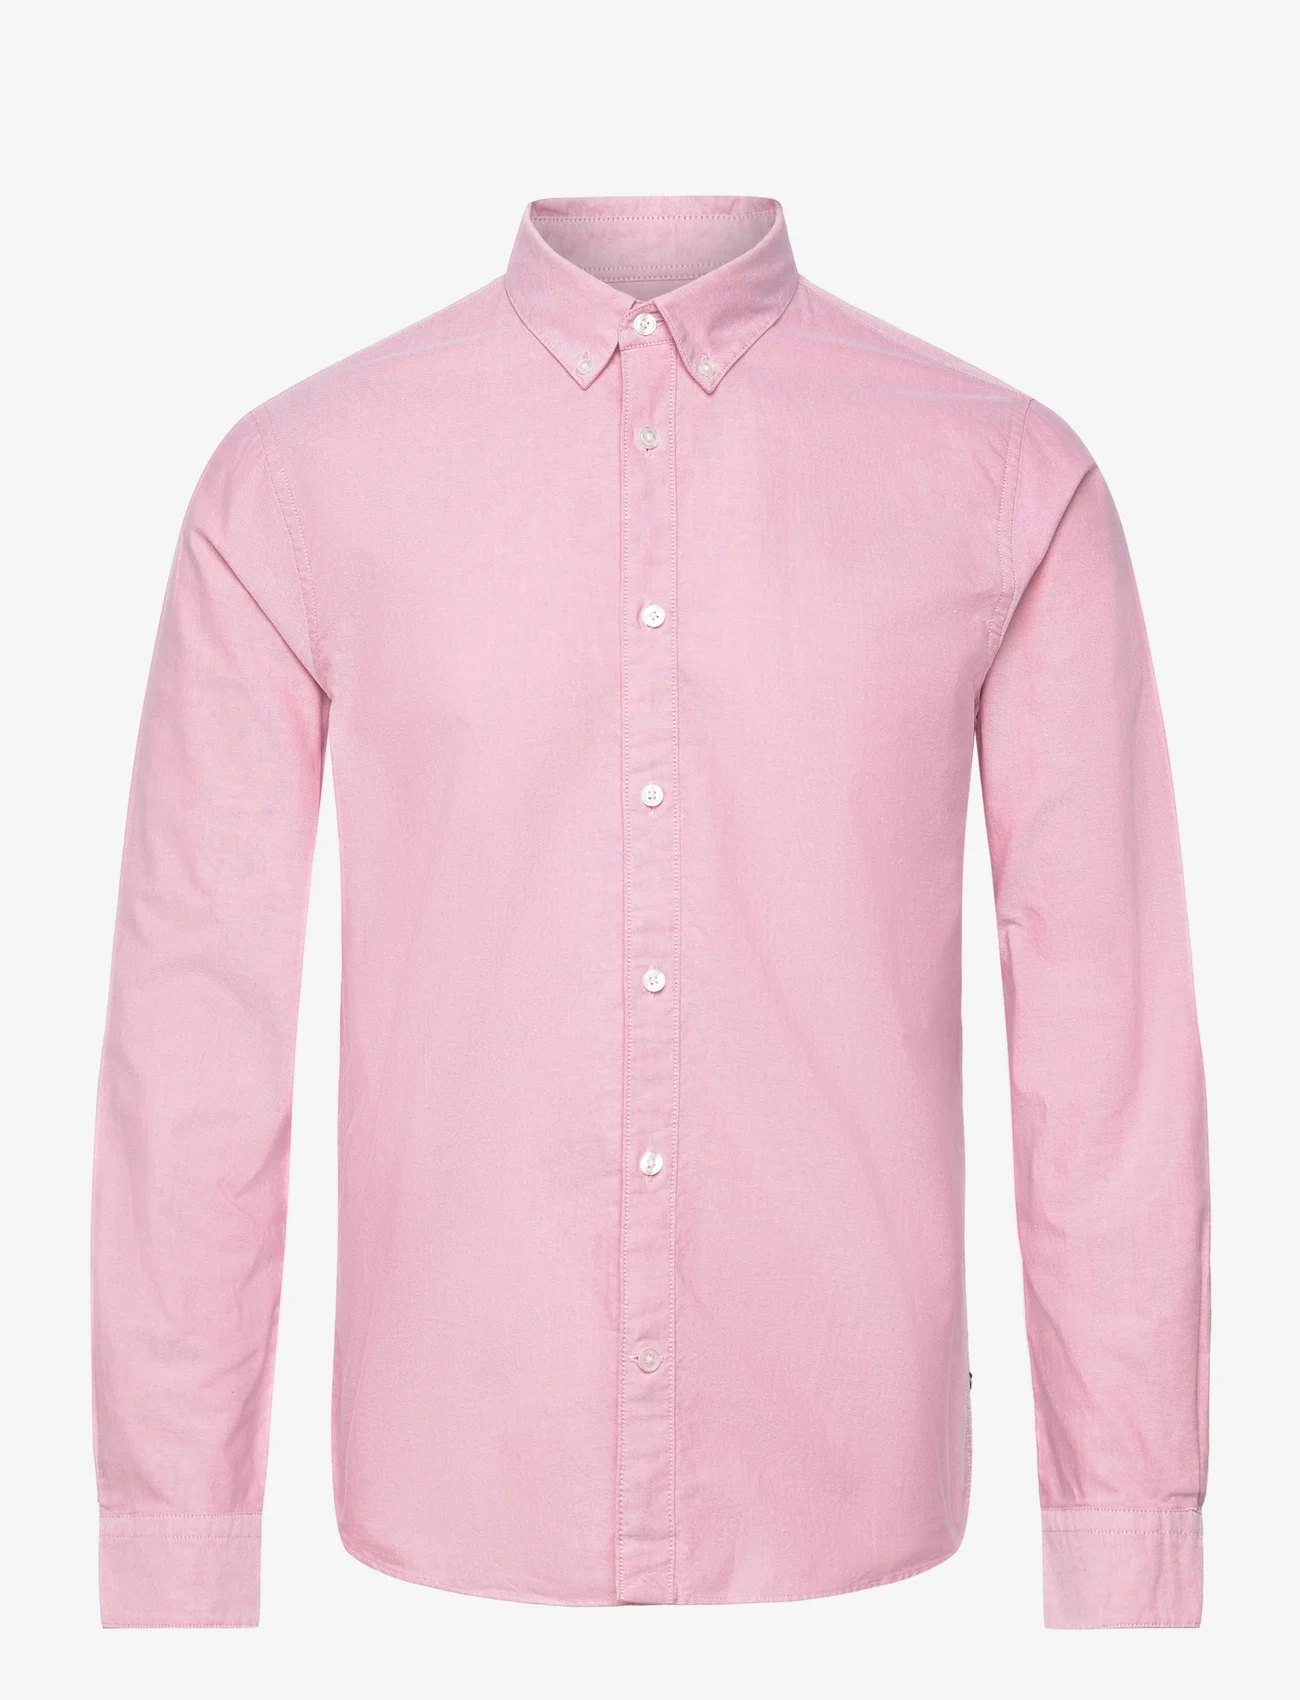 Matinique - MAtrostol BD - business skjortor - faded rose - 0